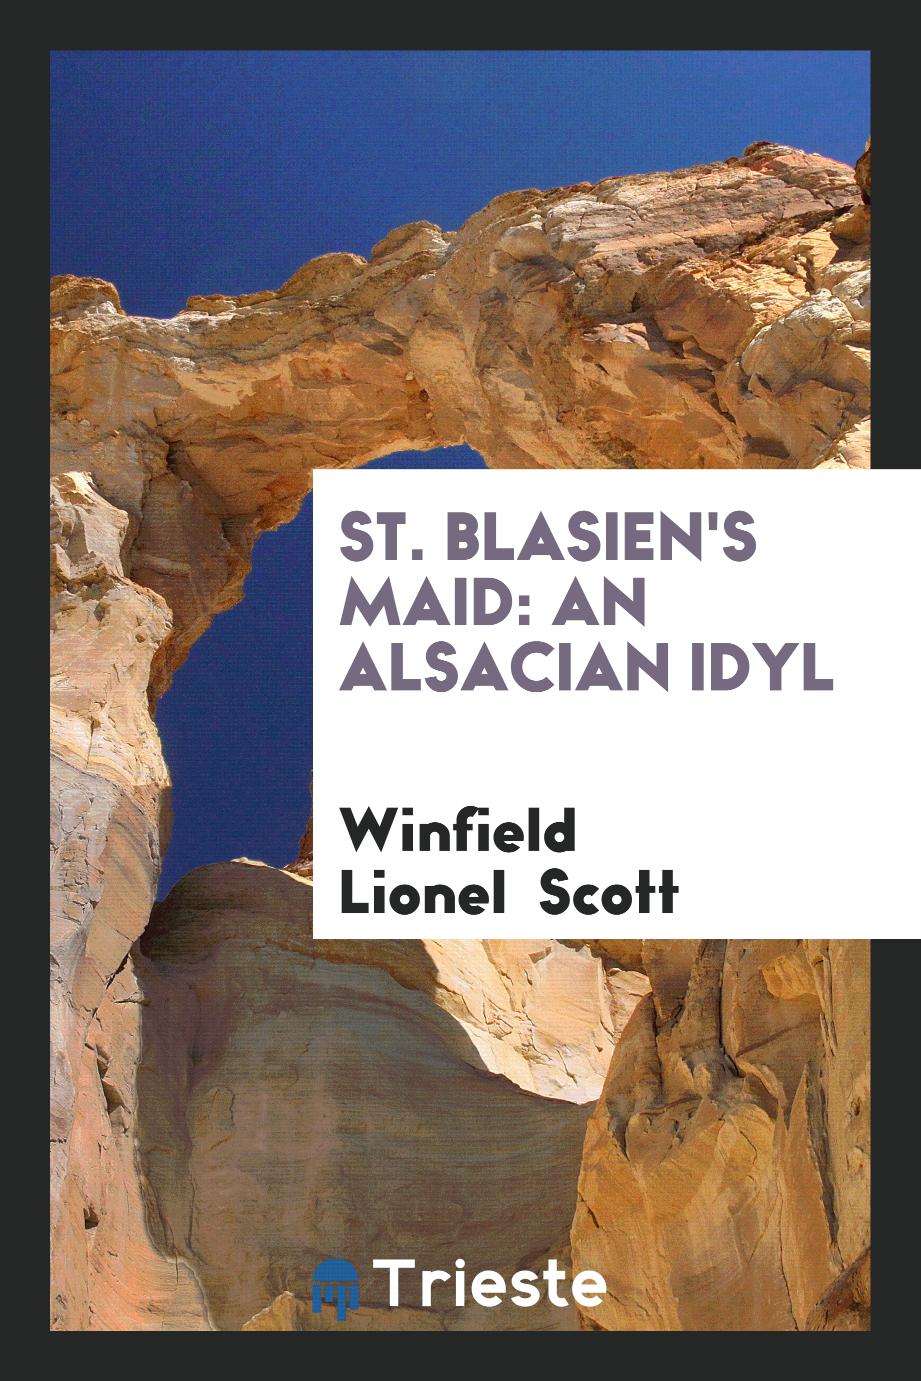 St. Blasien's Maid: An Alsacian Idyl